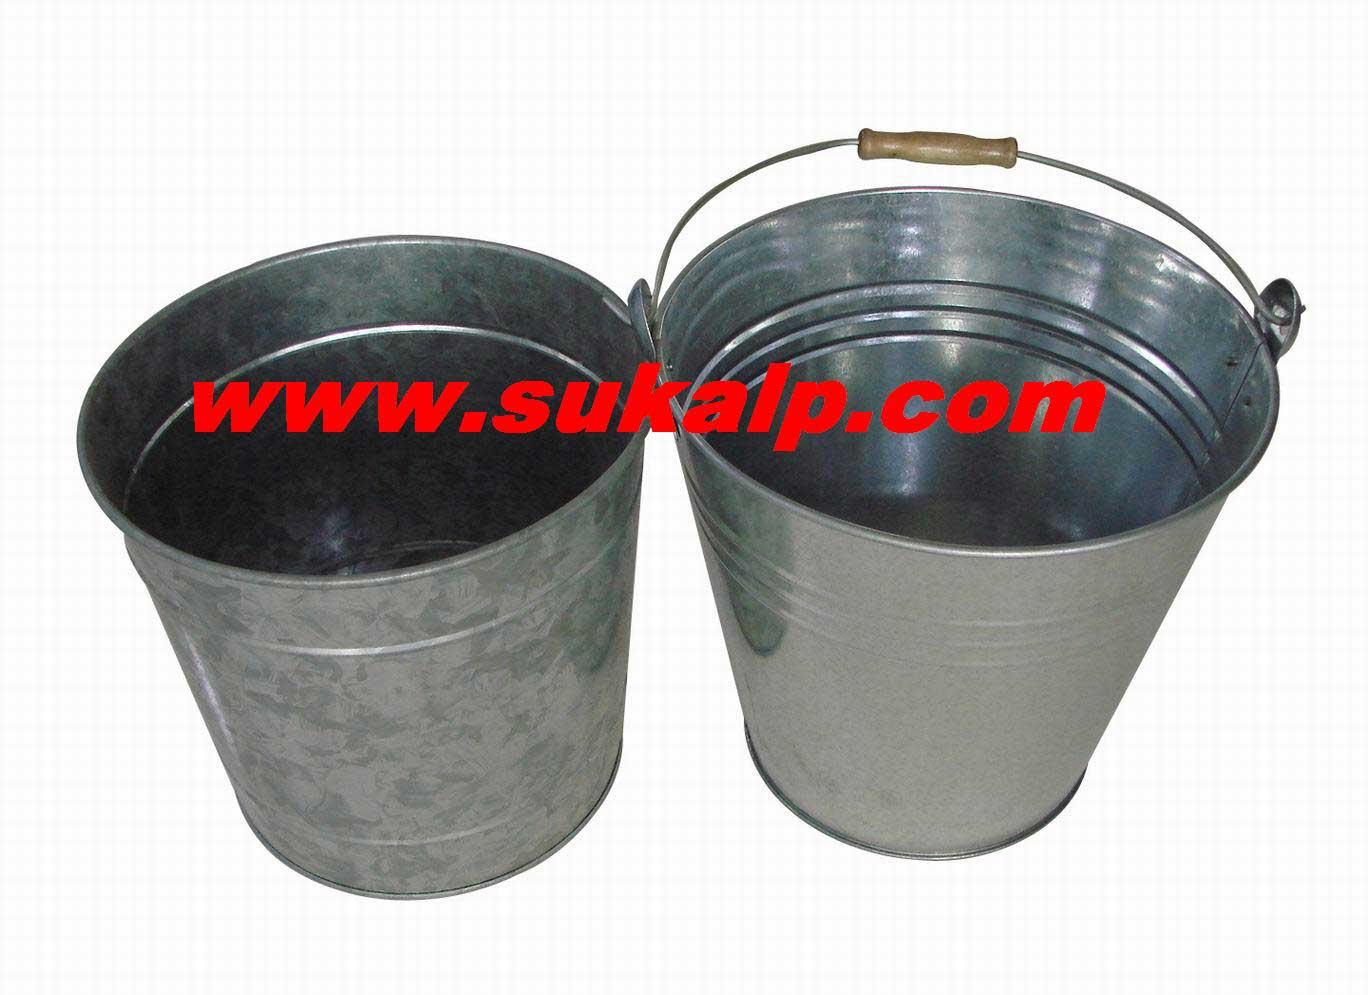 Galvanized Iron pail